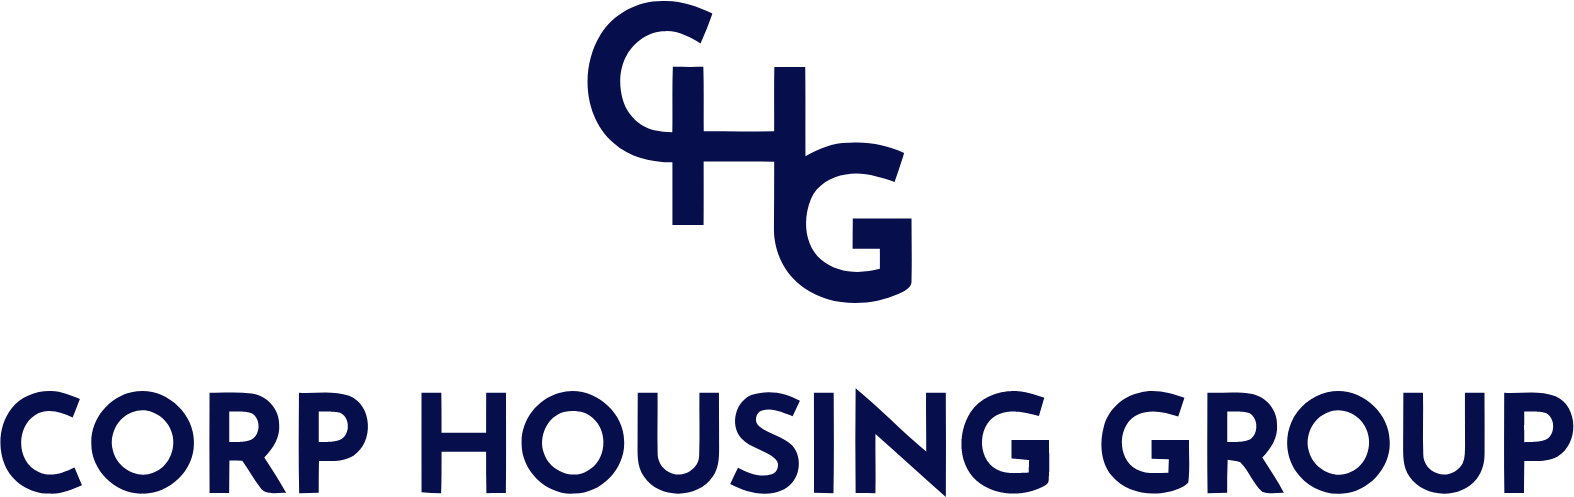 CorpHousing Group logo large (transparent PNG)